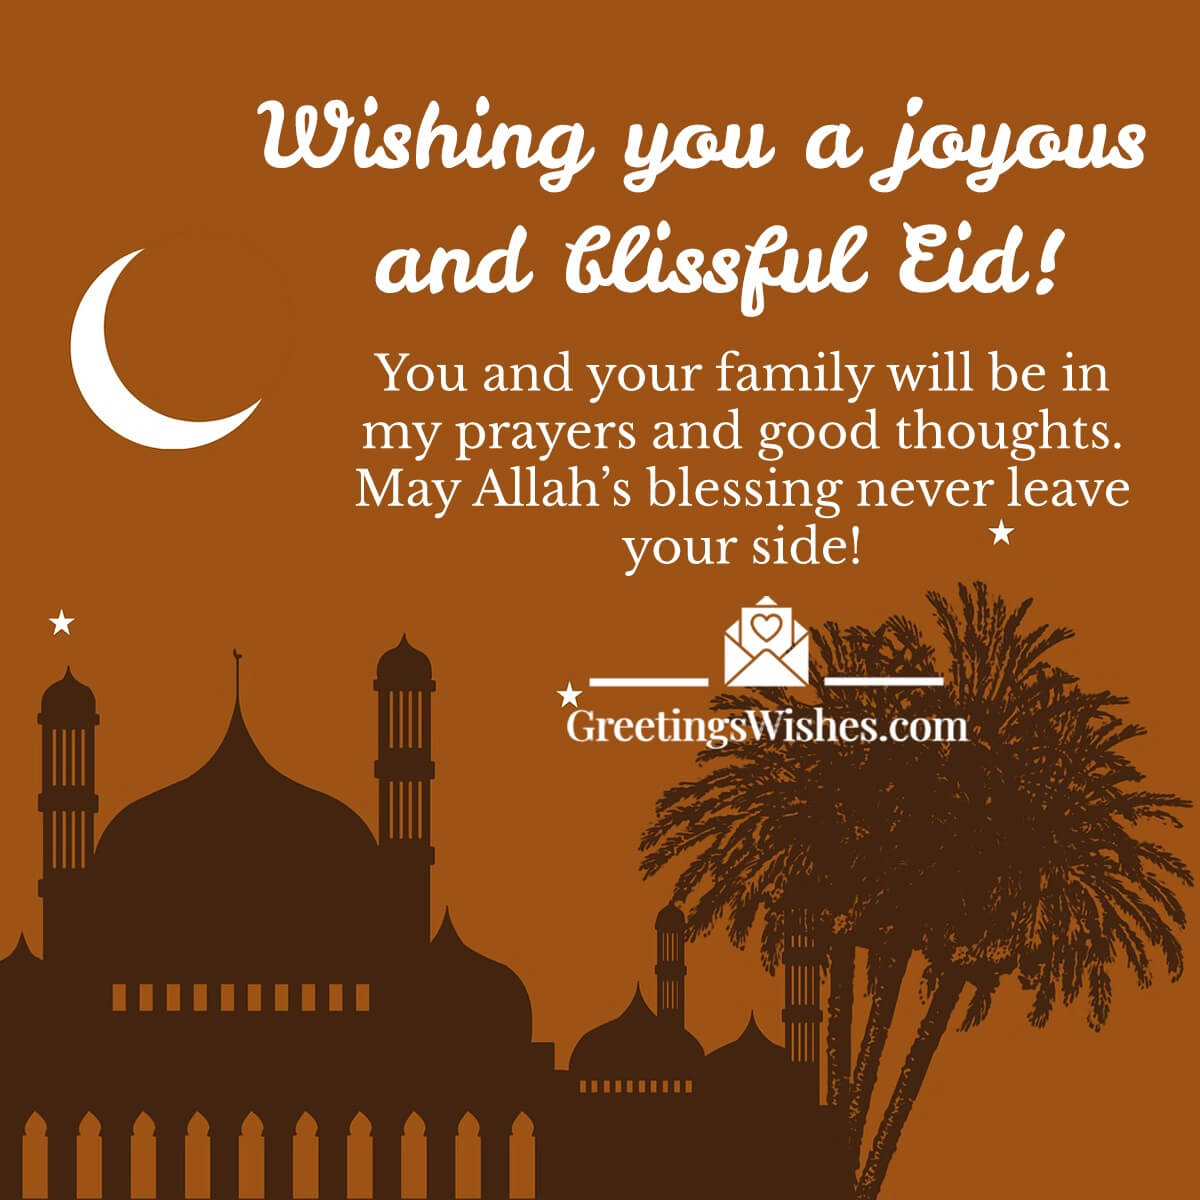 Wishing You A Joyous And Blissful Eid!